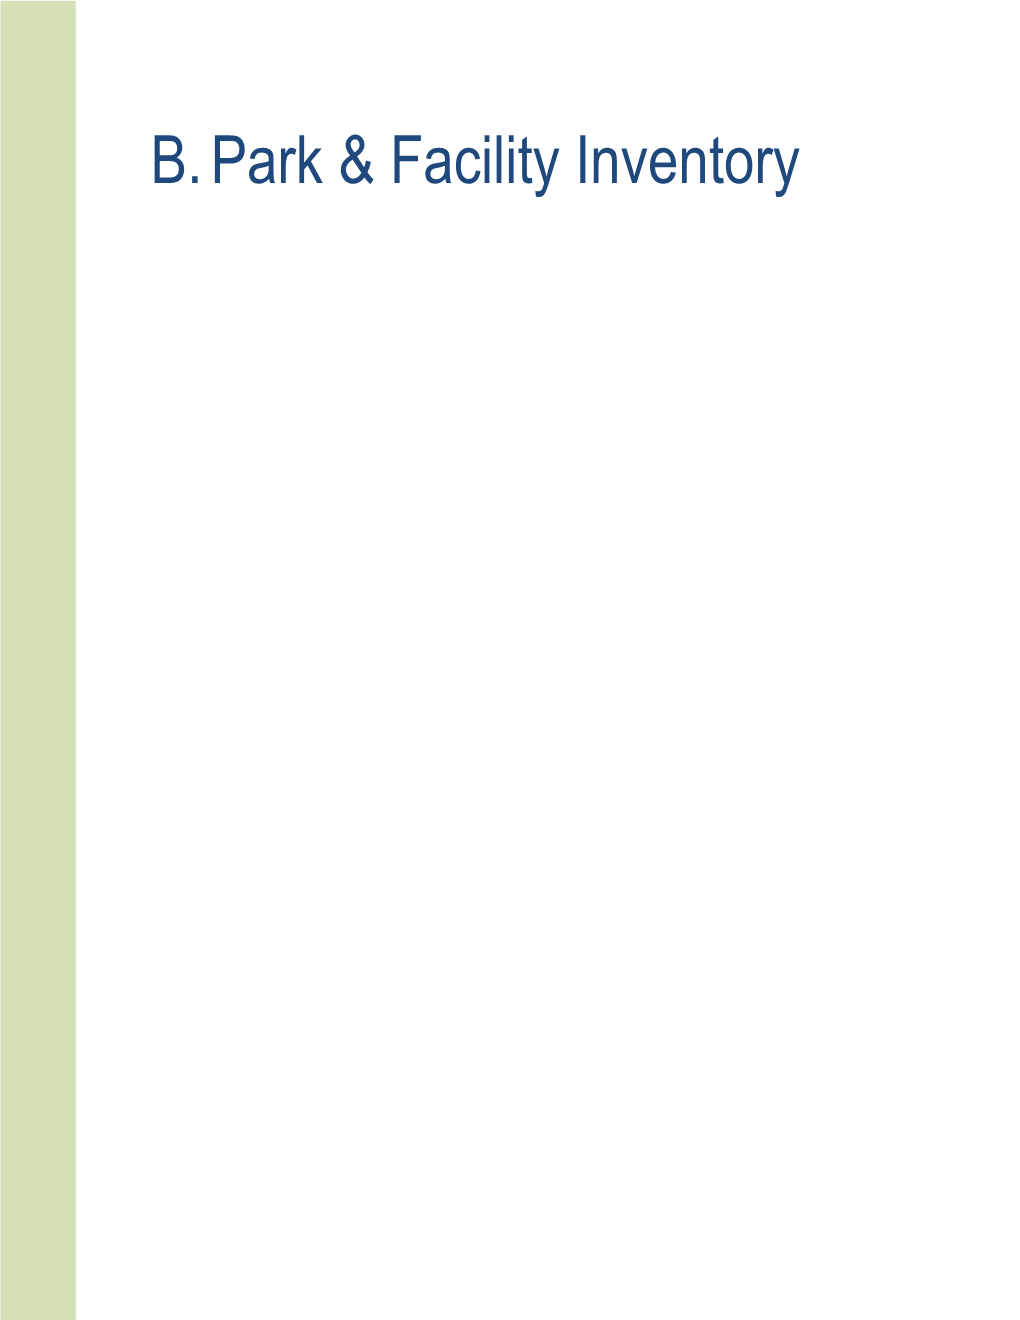 B. Park & Facility Inventory